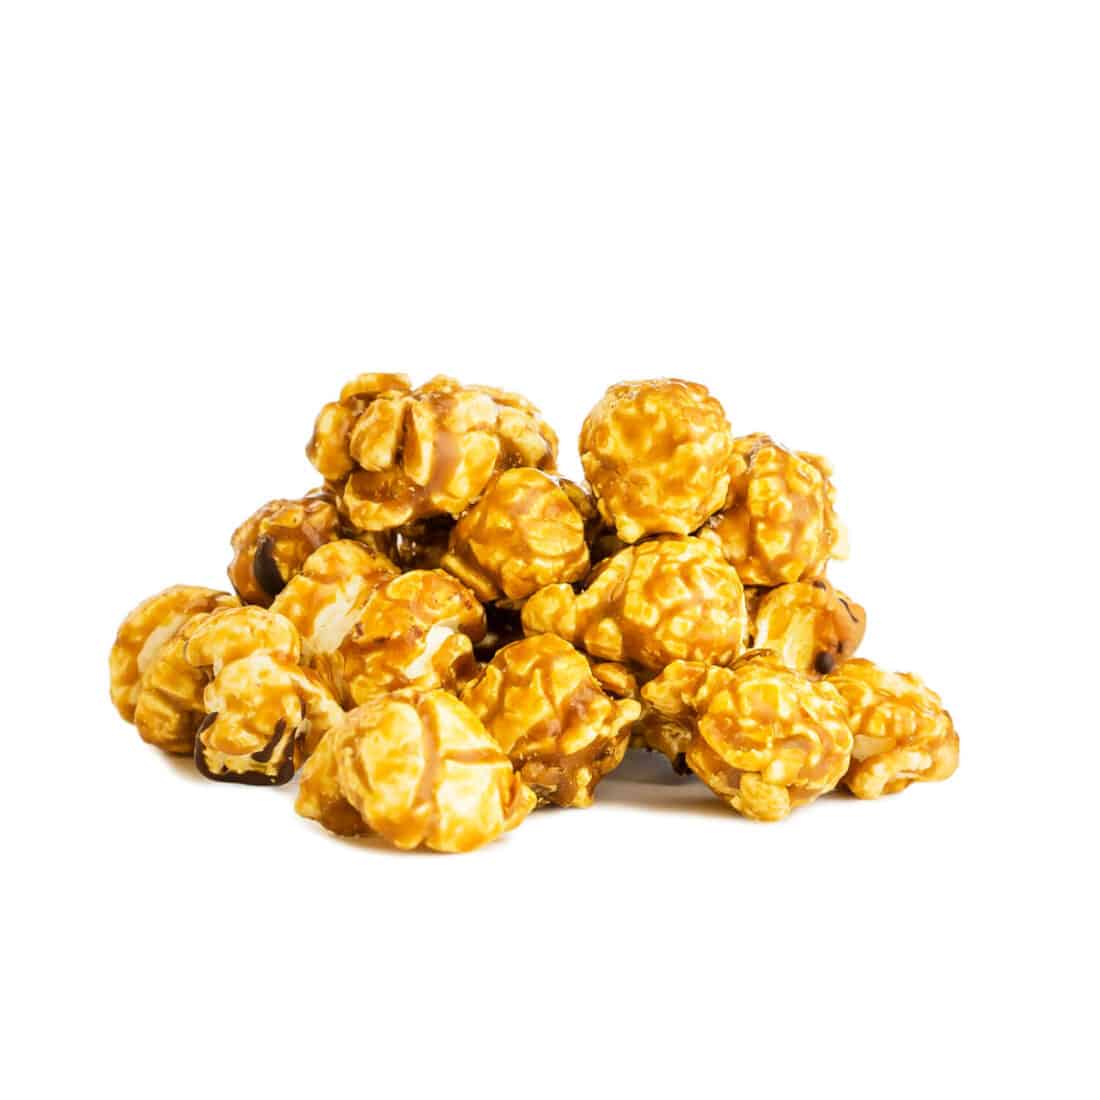 caramel coated popcorn